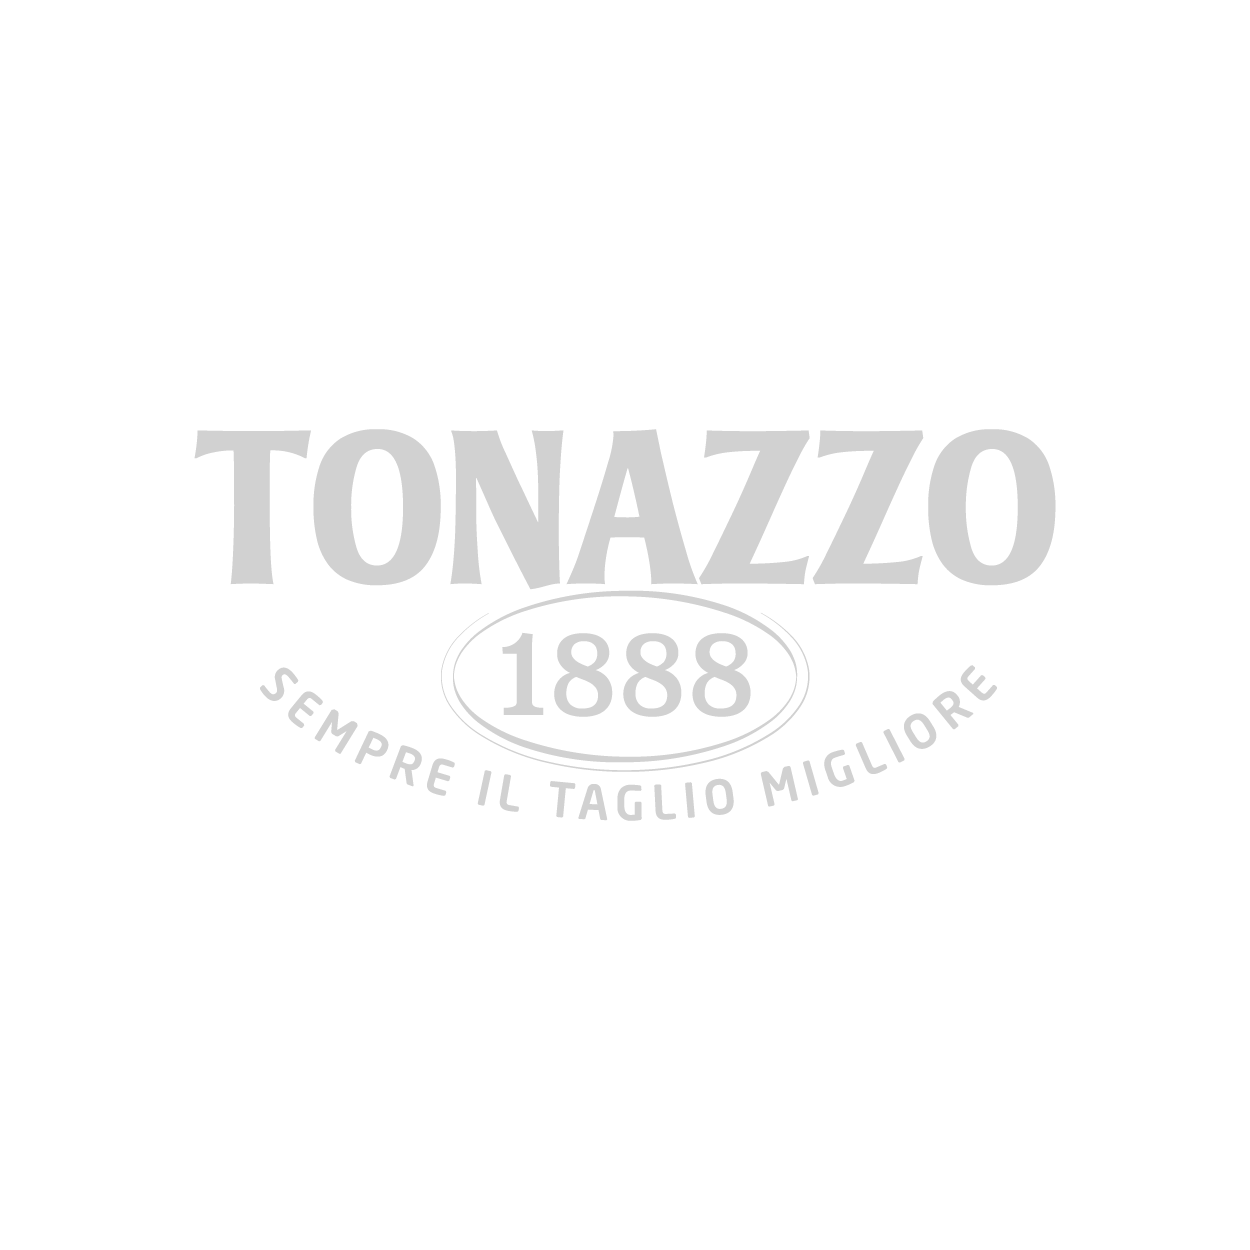 Tonazzo